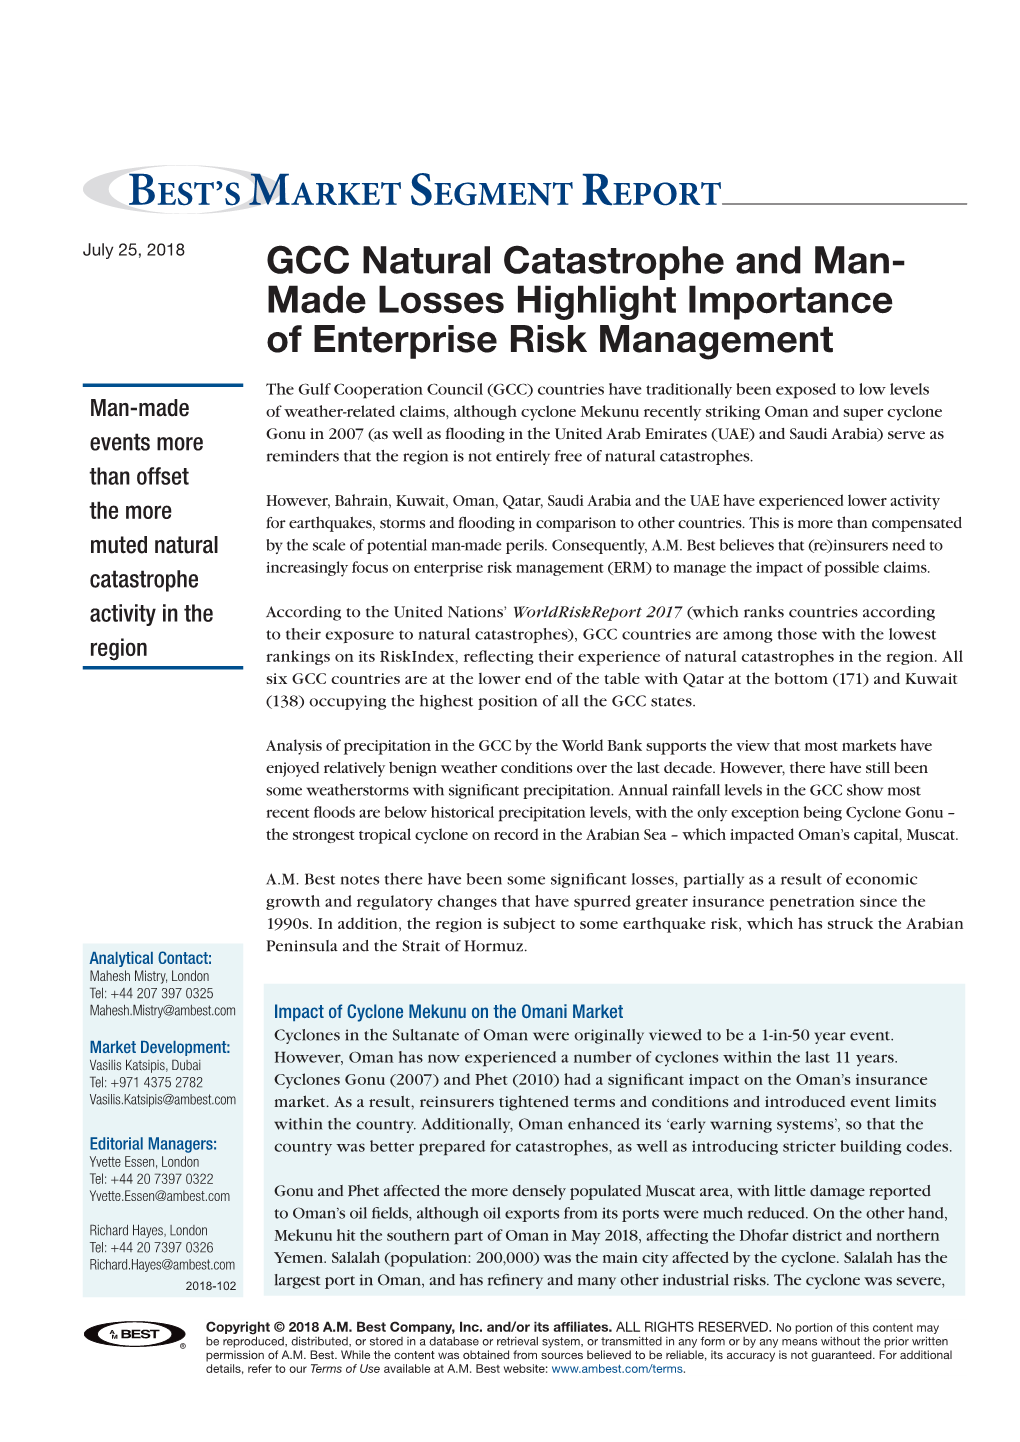 Market Segment Report: GCC Natural Catastrophe and Man-Made Losses